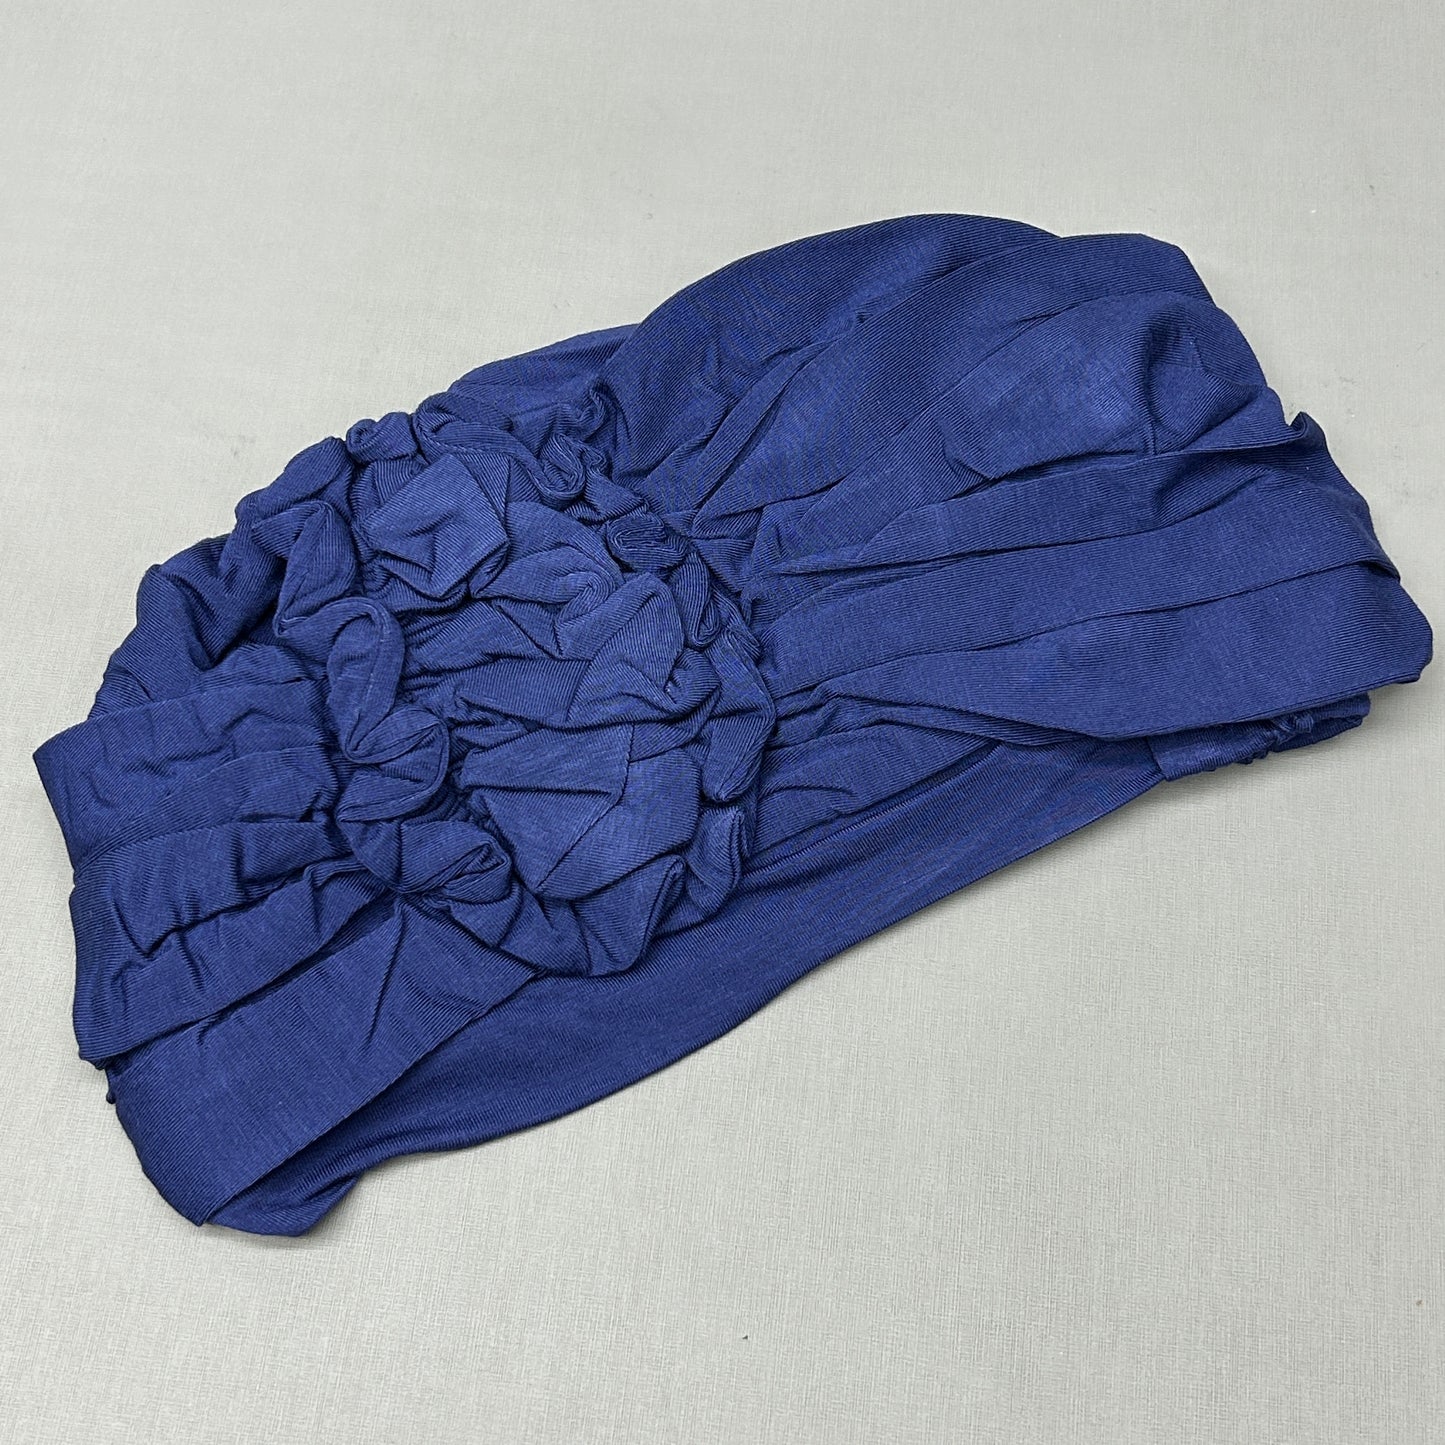 CHRISTINE HEADWEAR Lotus Turban Dark Blue 1003-0255 (New)